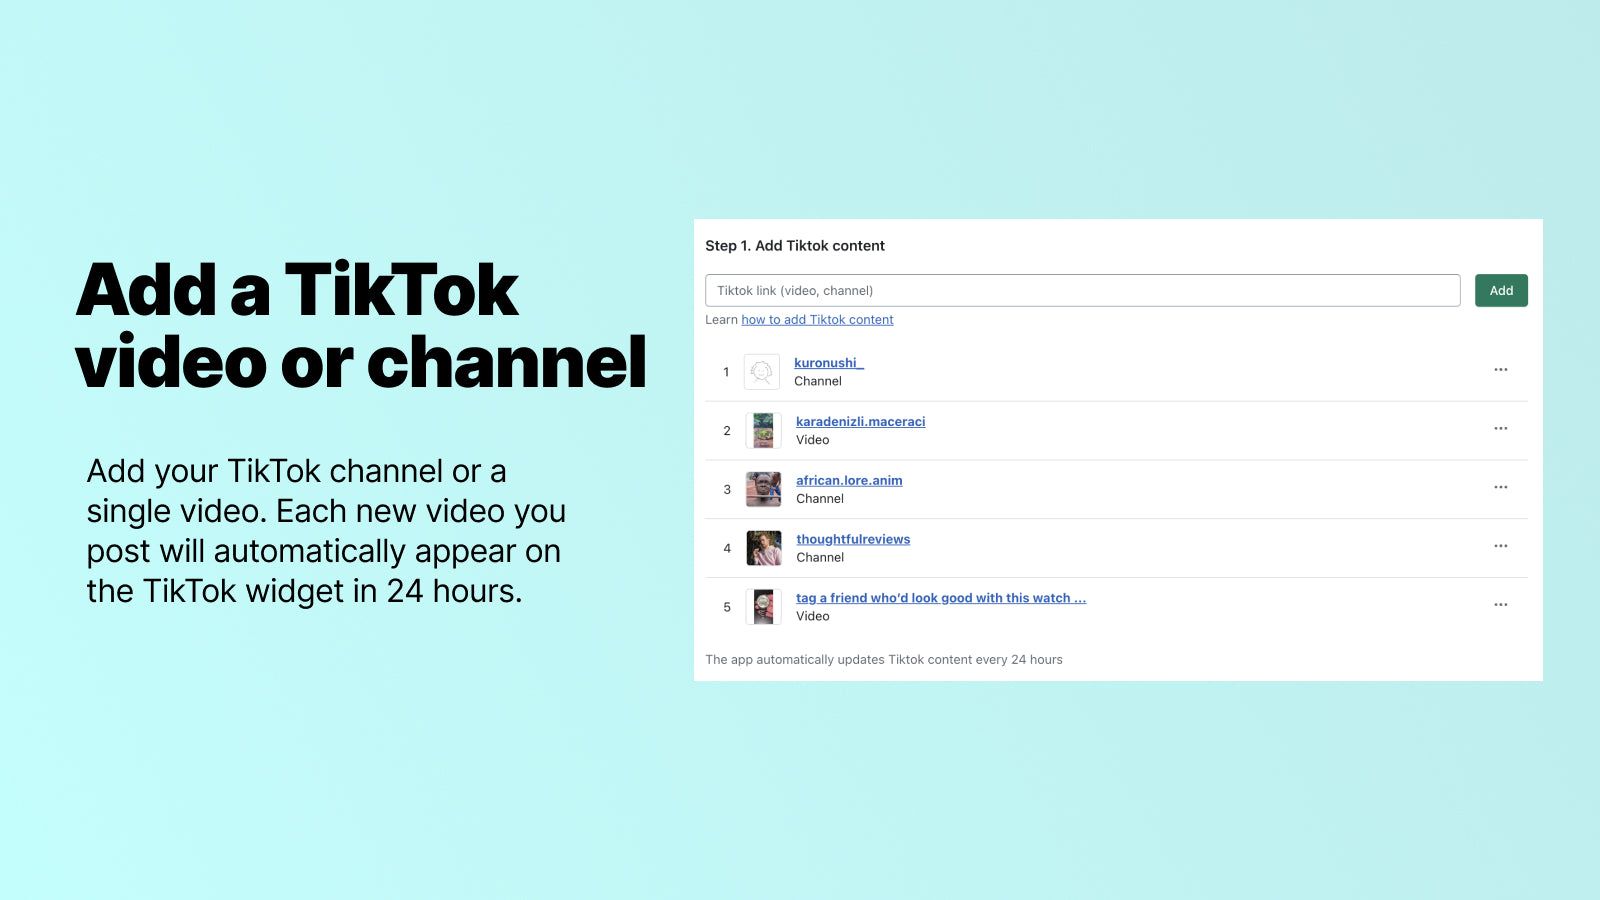 Add a TikTok channel or video